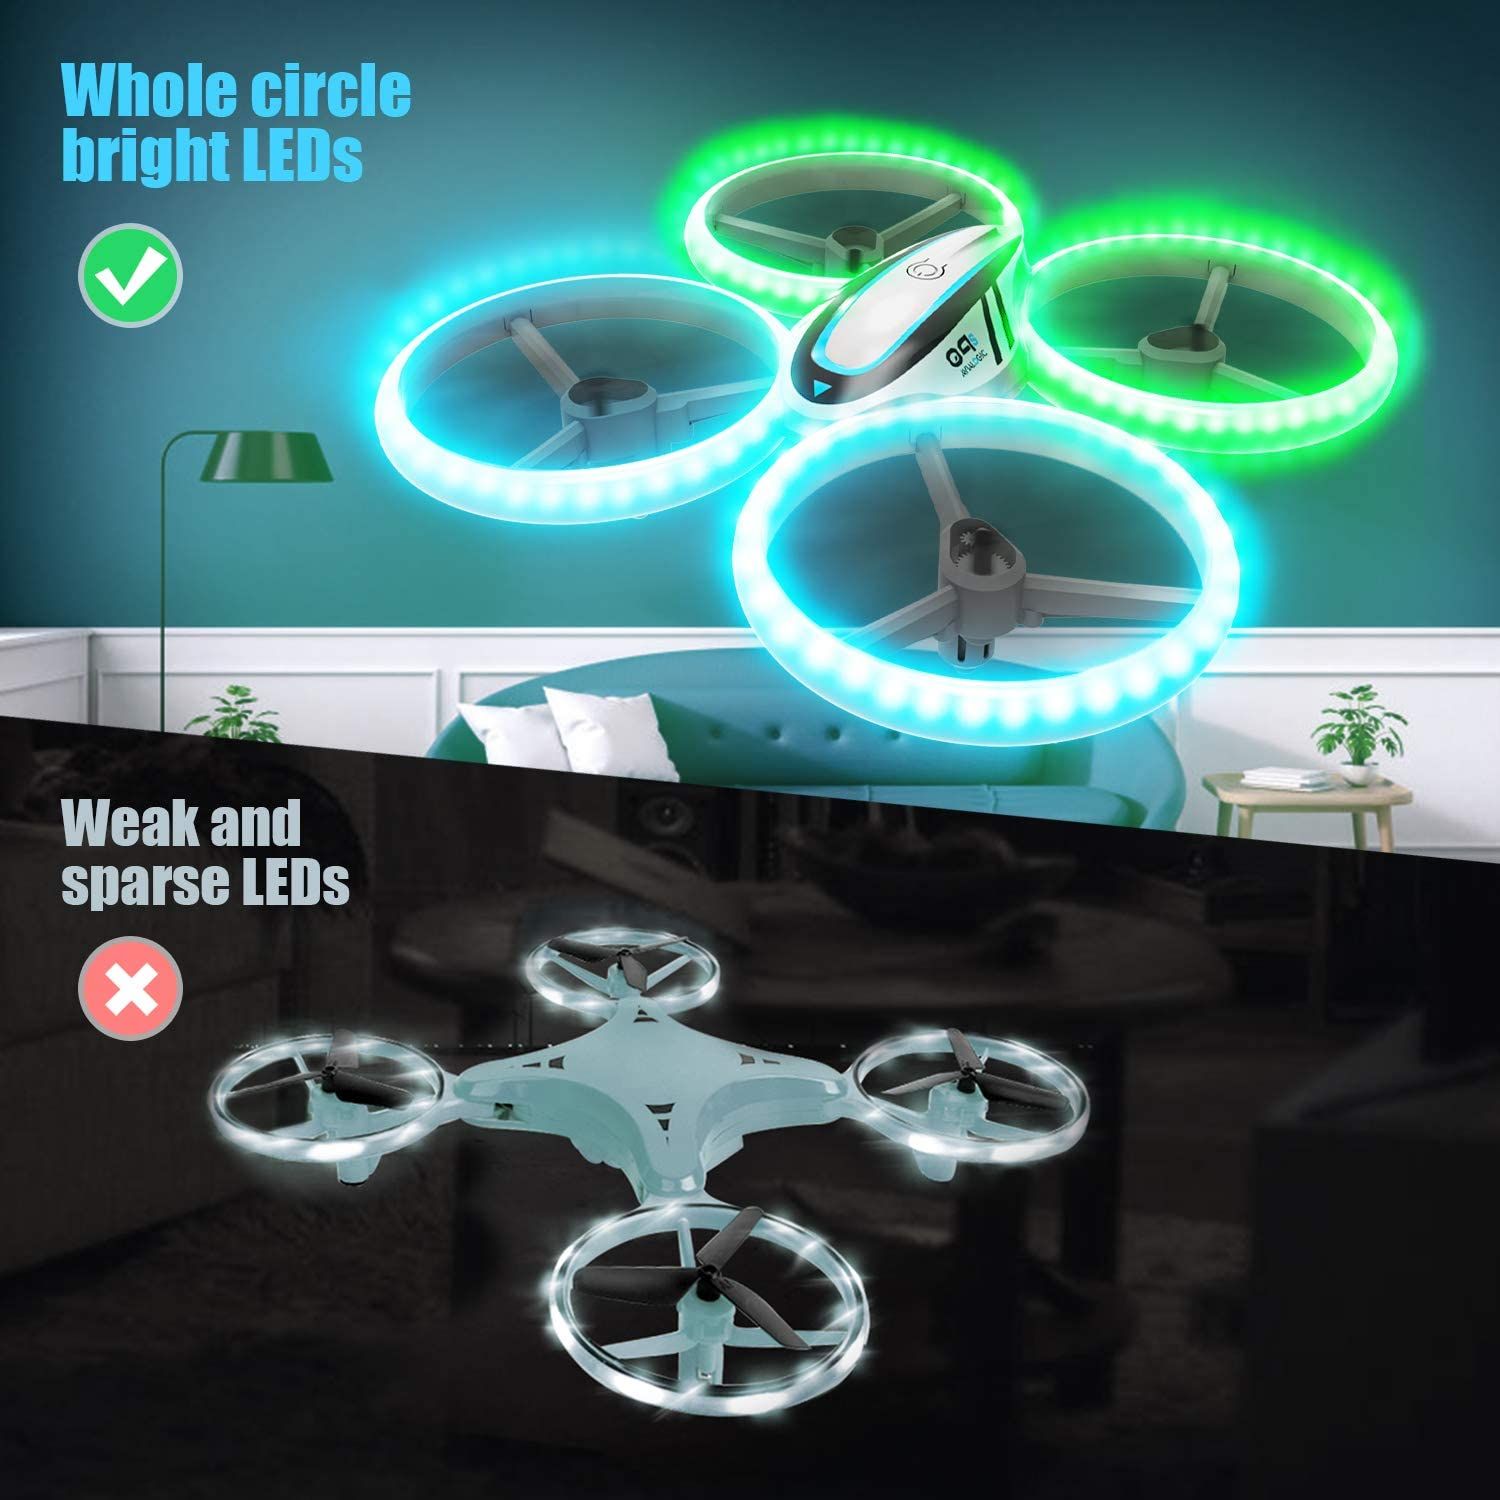 Q9s Drone lights